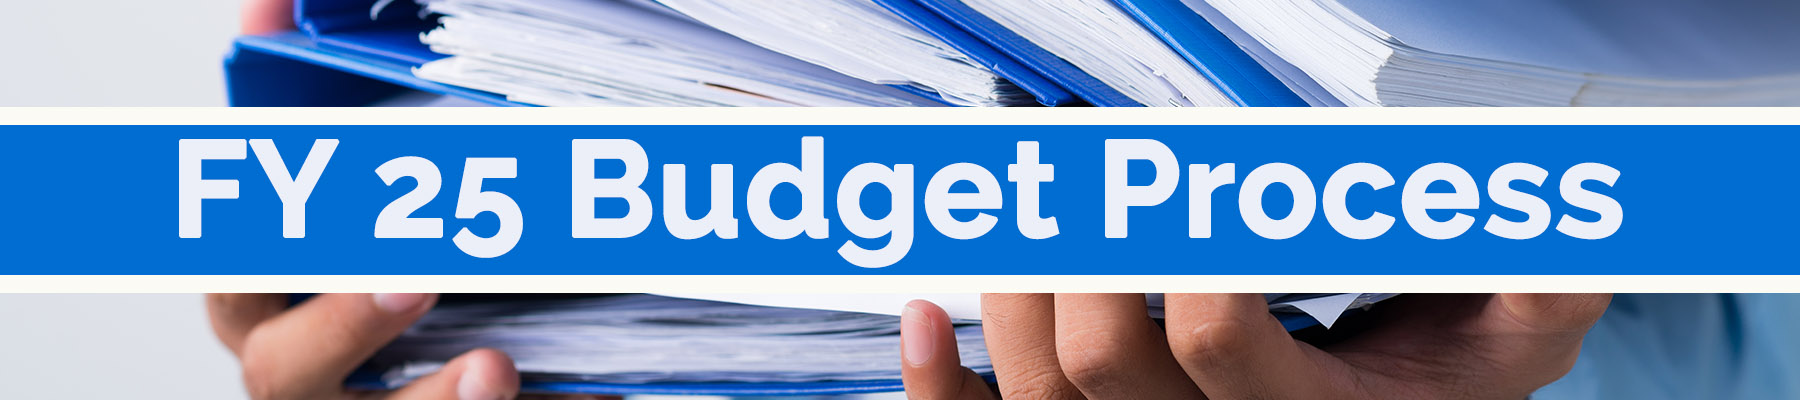 FY 25 Budget Process - Documents & Presentations